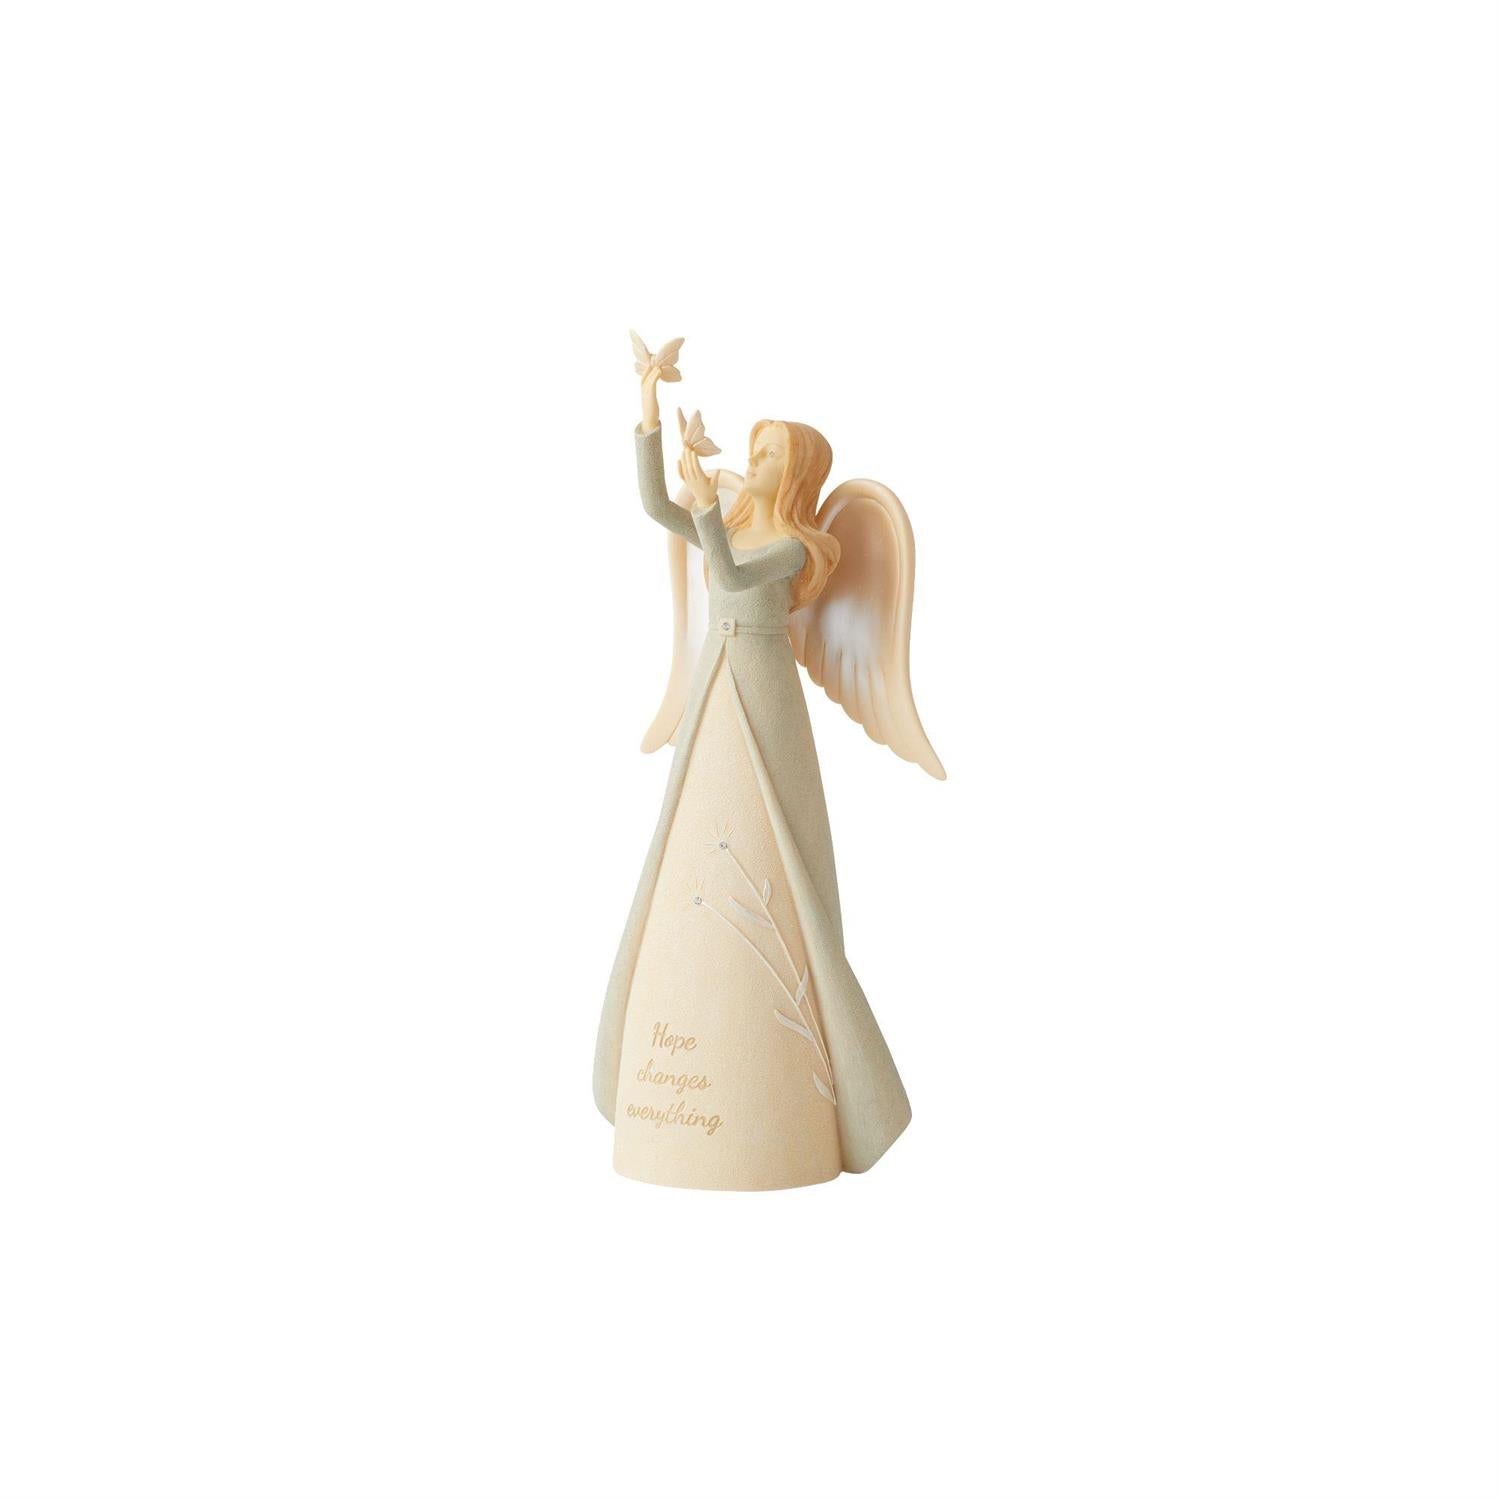 Enesco Foundations Angel of Hope 9" Figurine